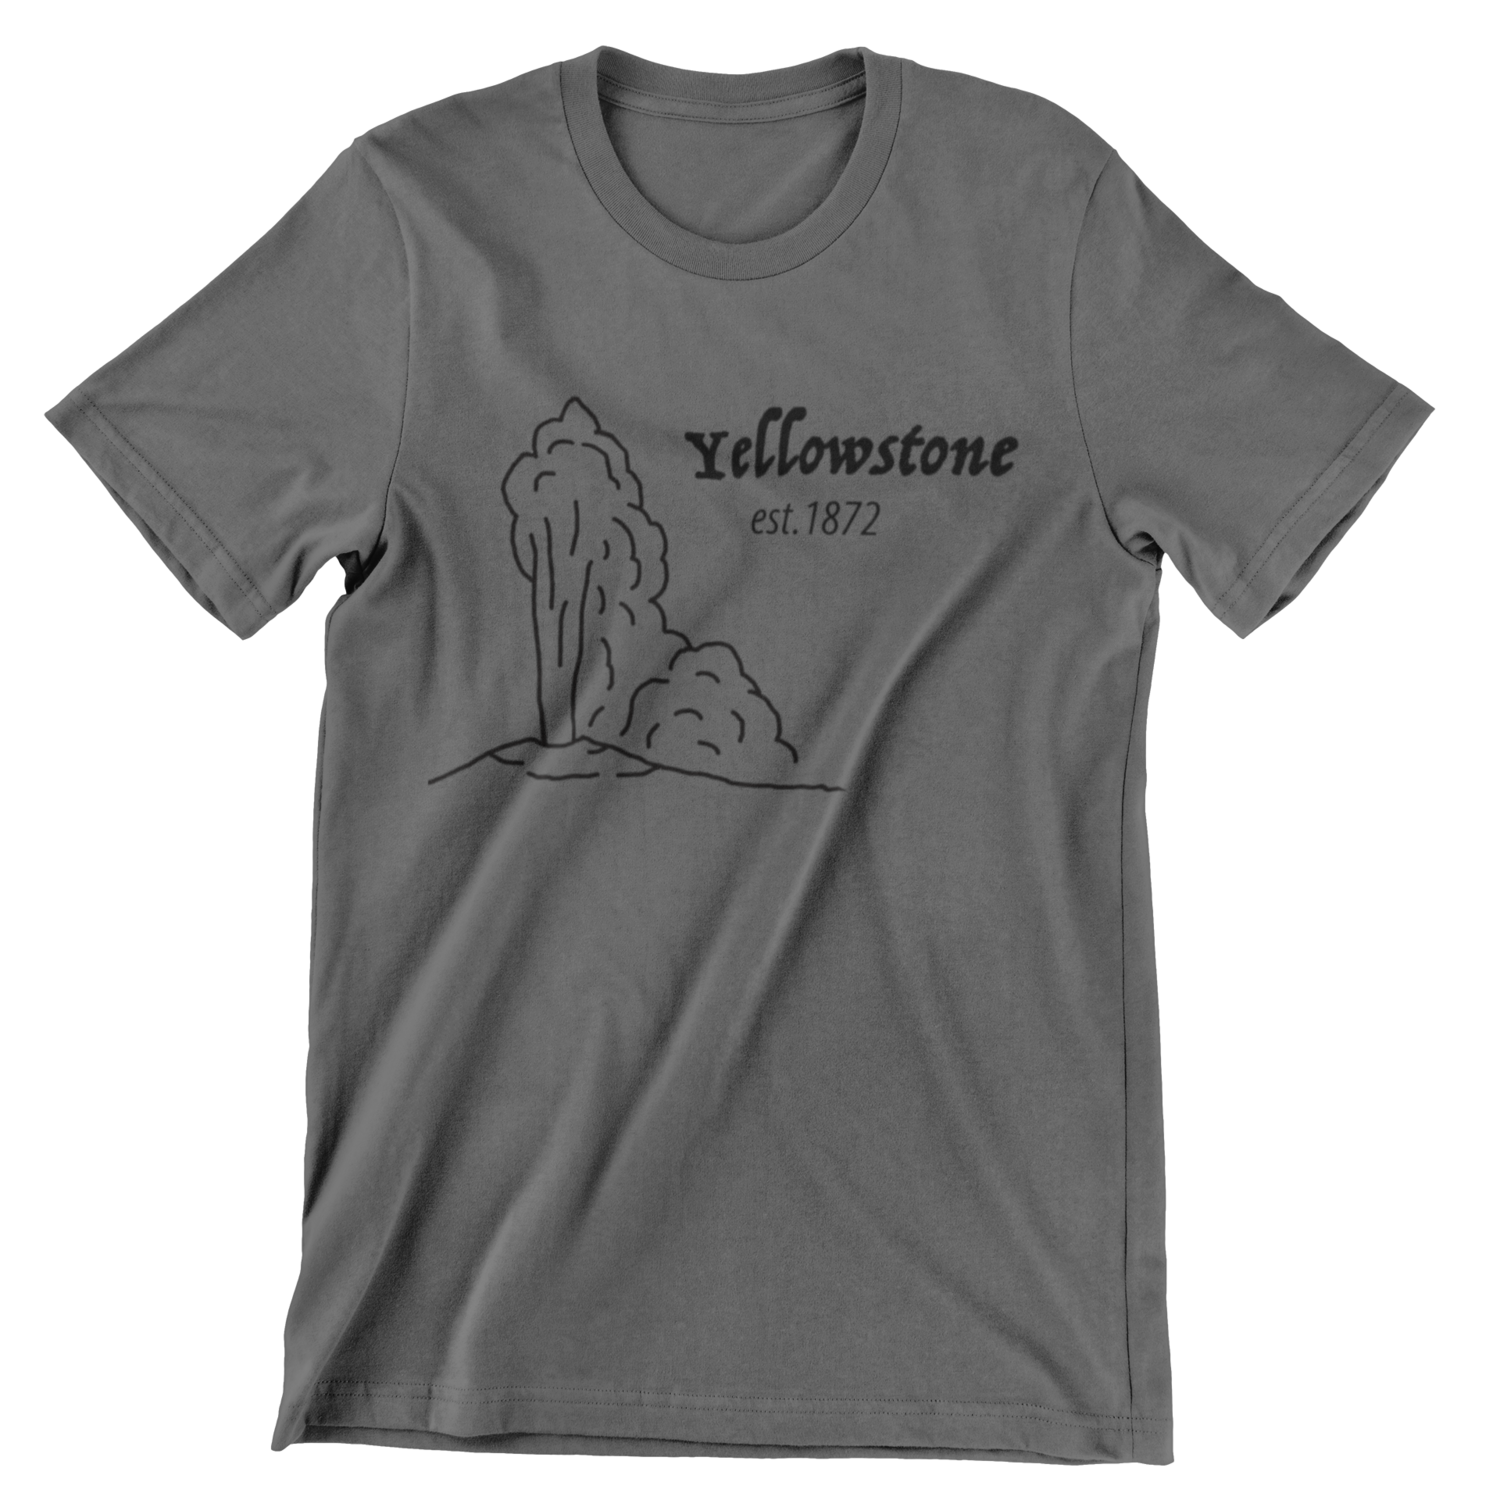 Yellowstone Explored - Old Faithful t-shirt